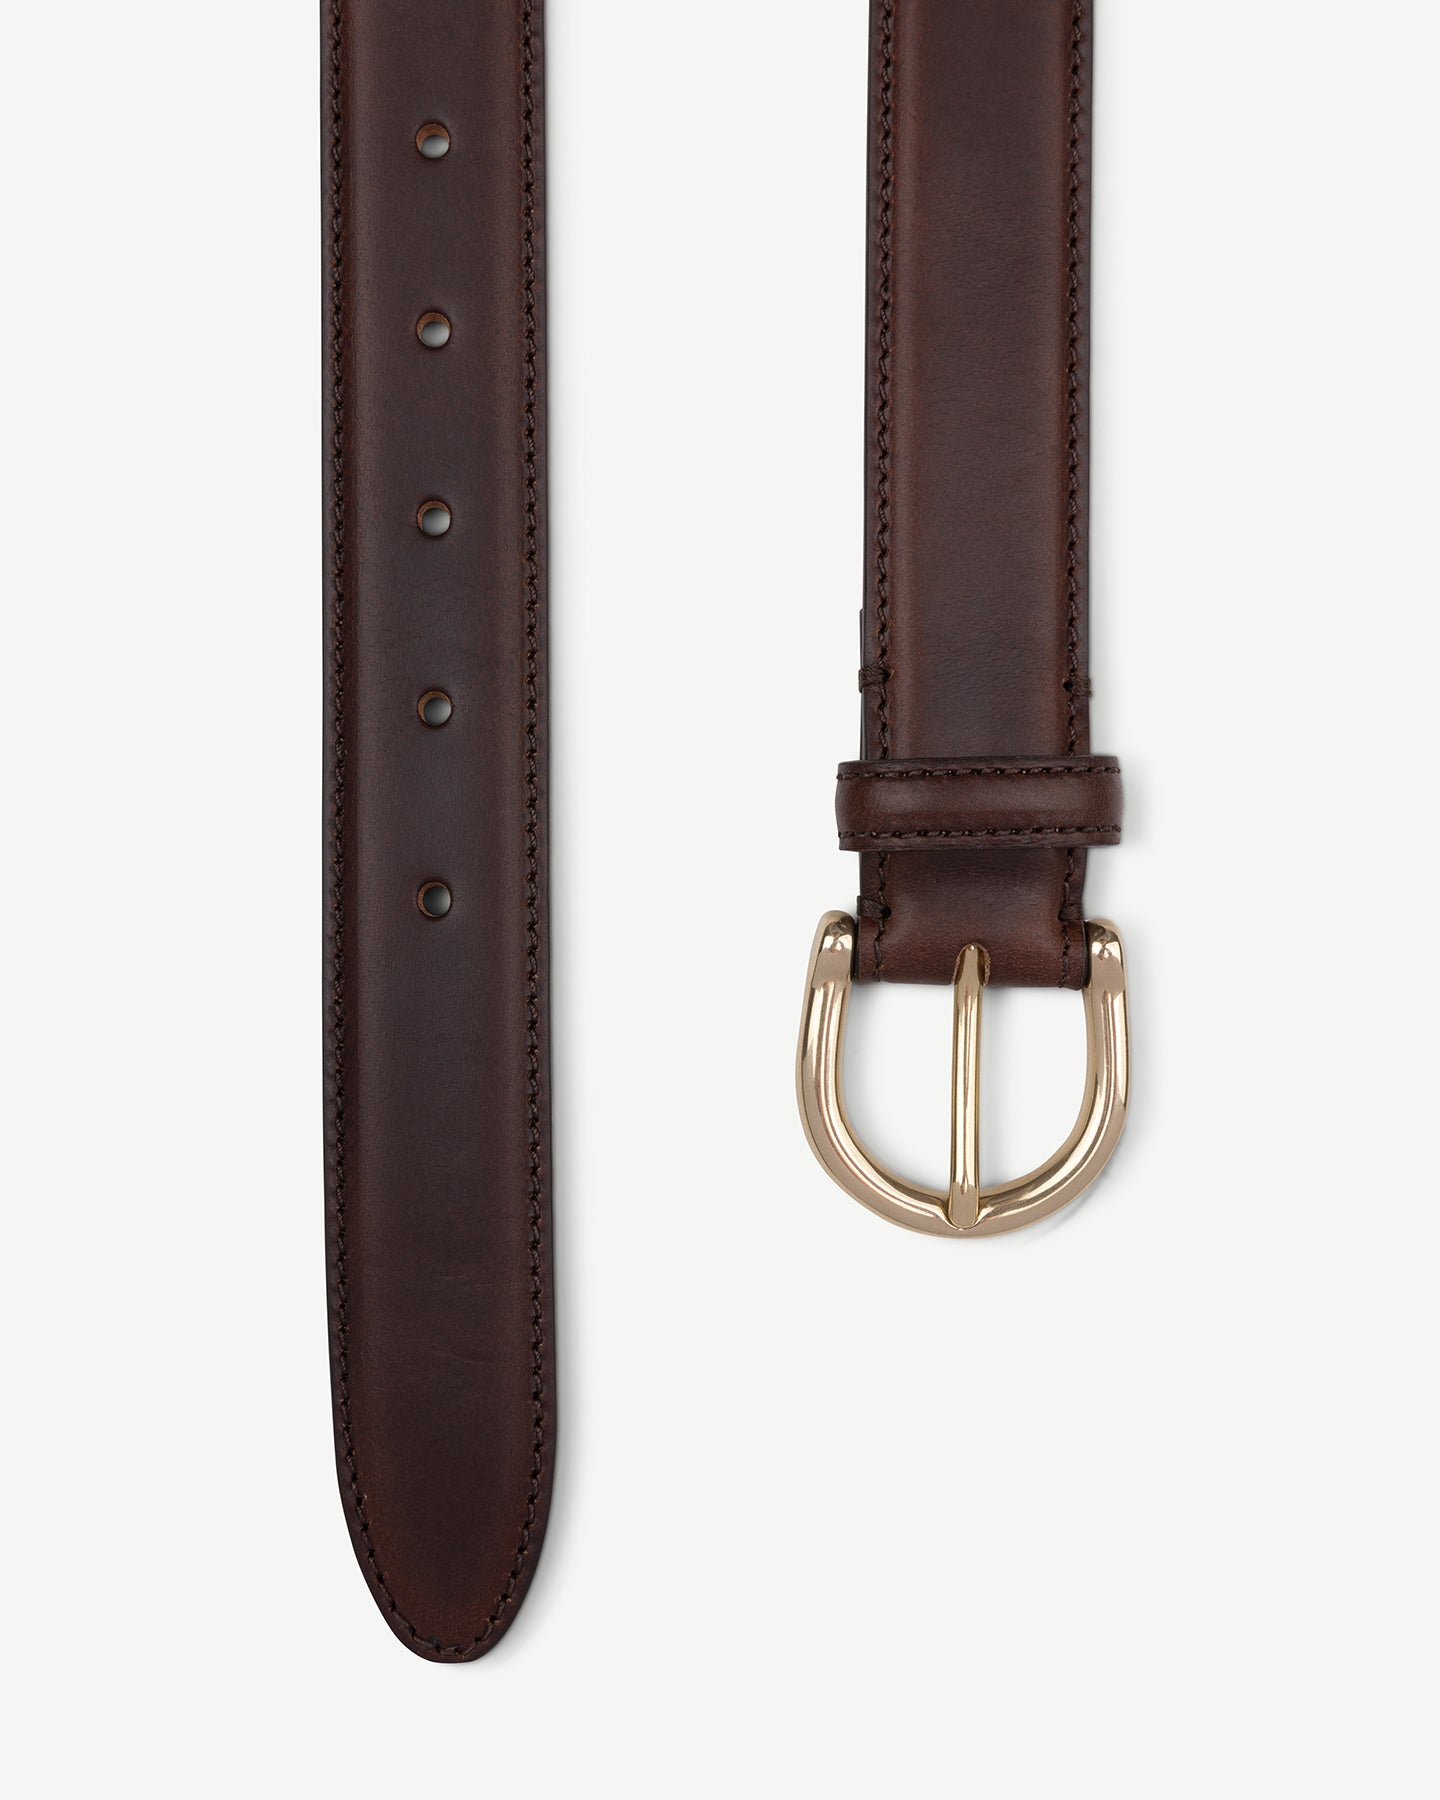 Dark brown leather dress belt with solid brass buckle